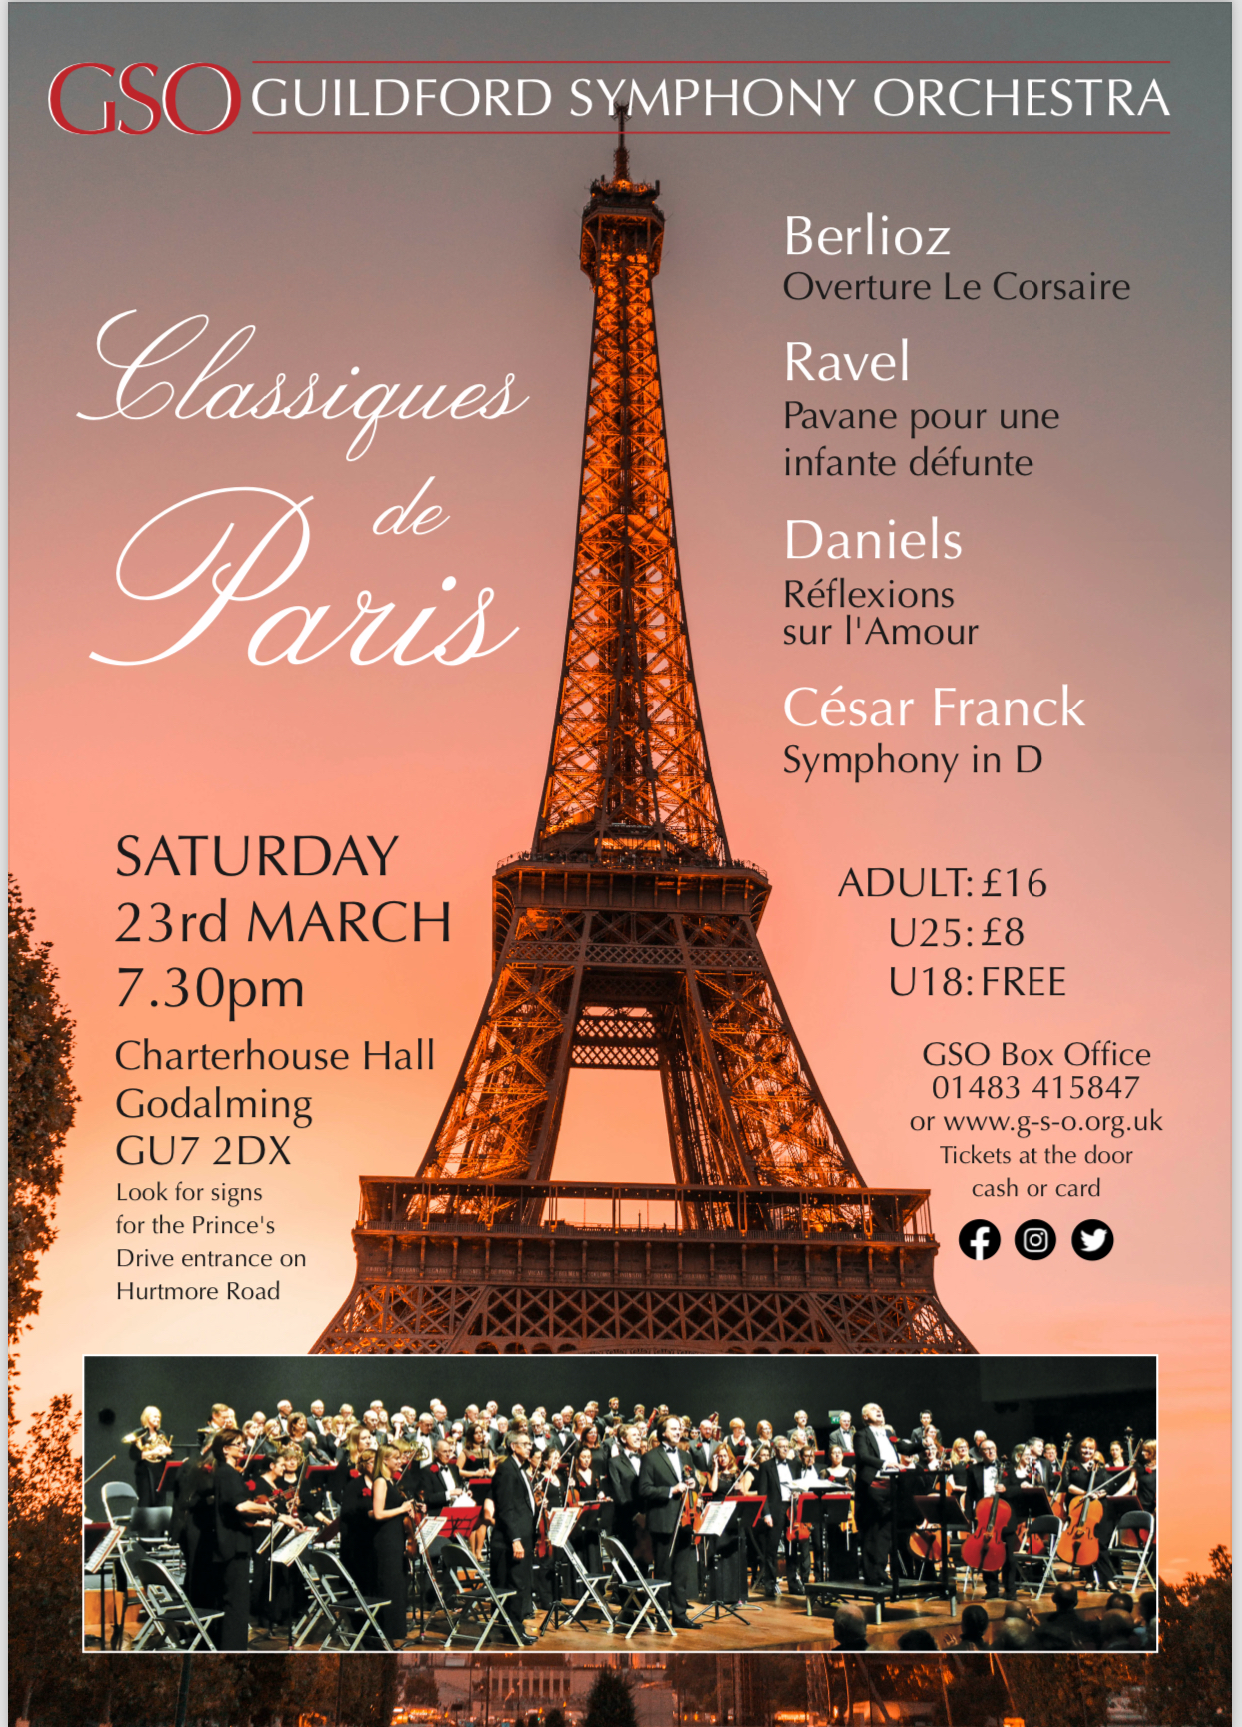 Guildford Symphony Orchestra: Classiques de Paris